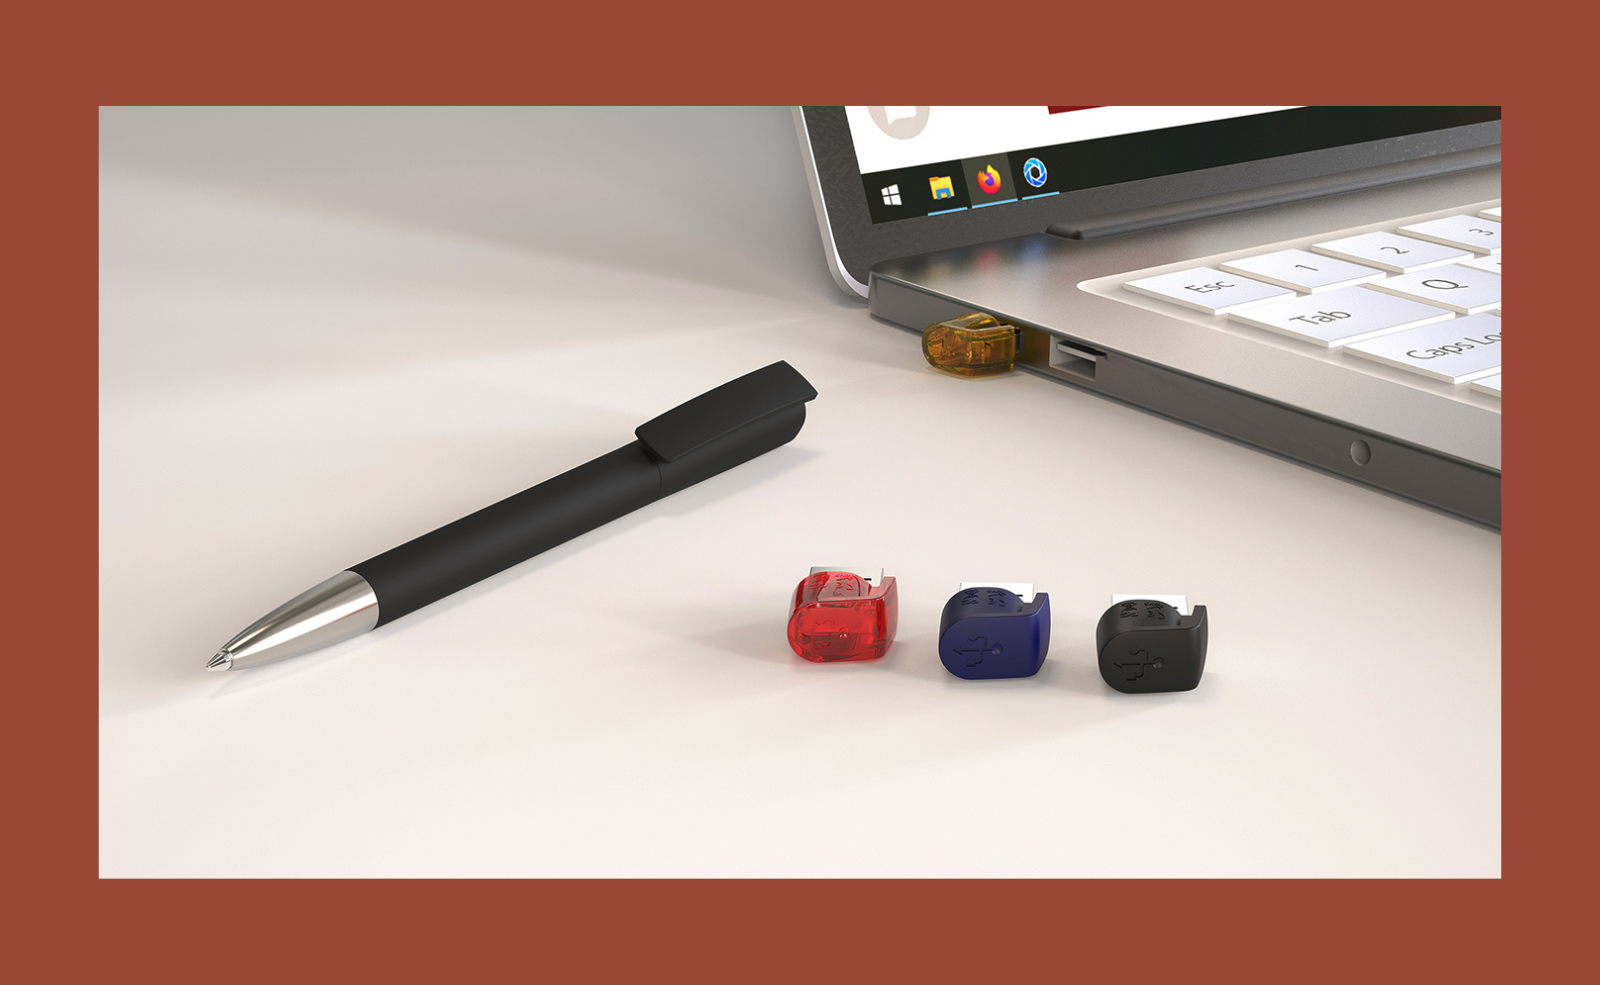 Turnus, the promotional ballpoint pen with integrated USB key by Klio Eterna